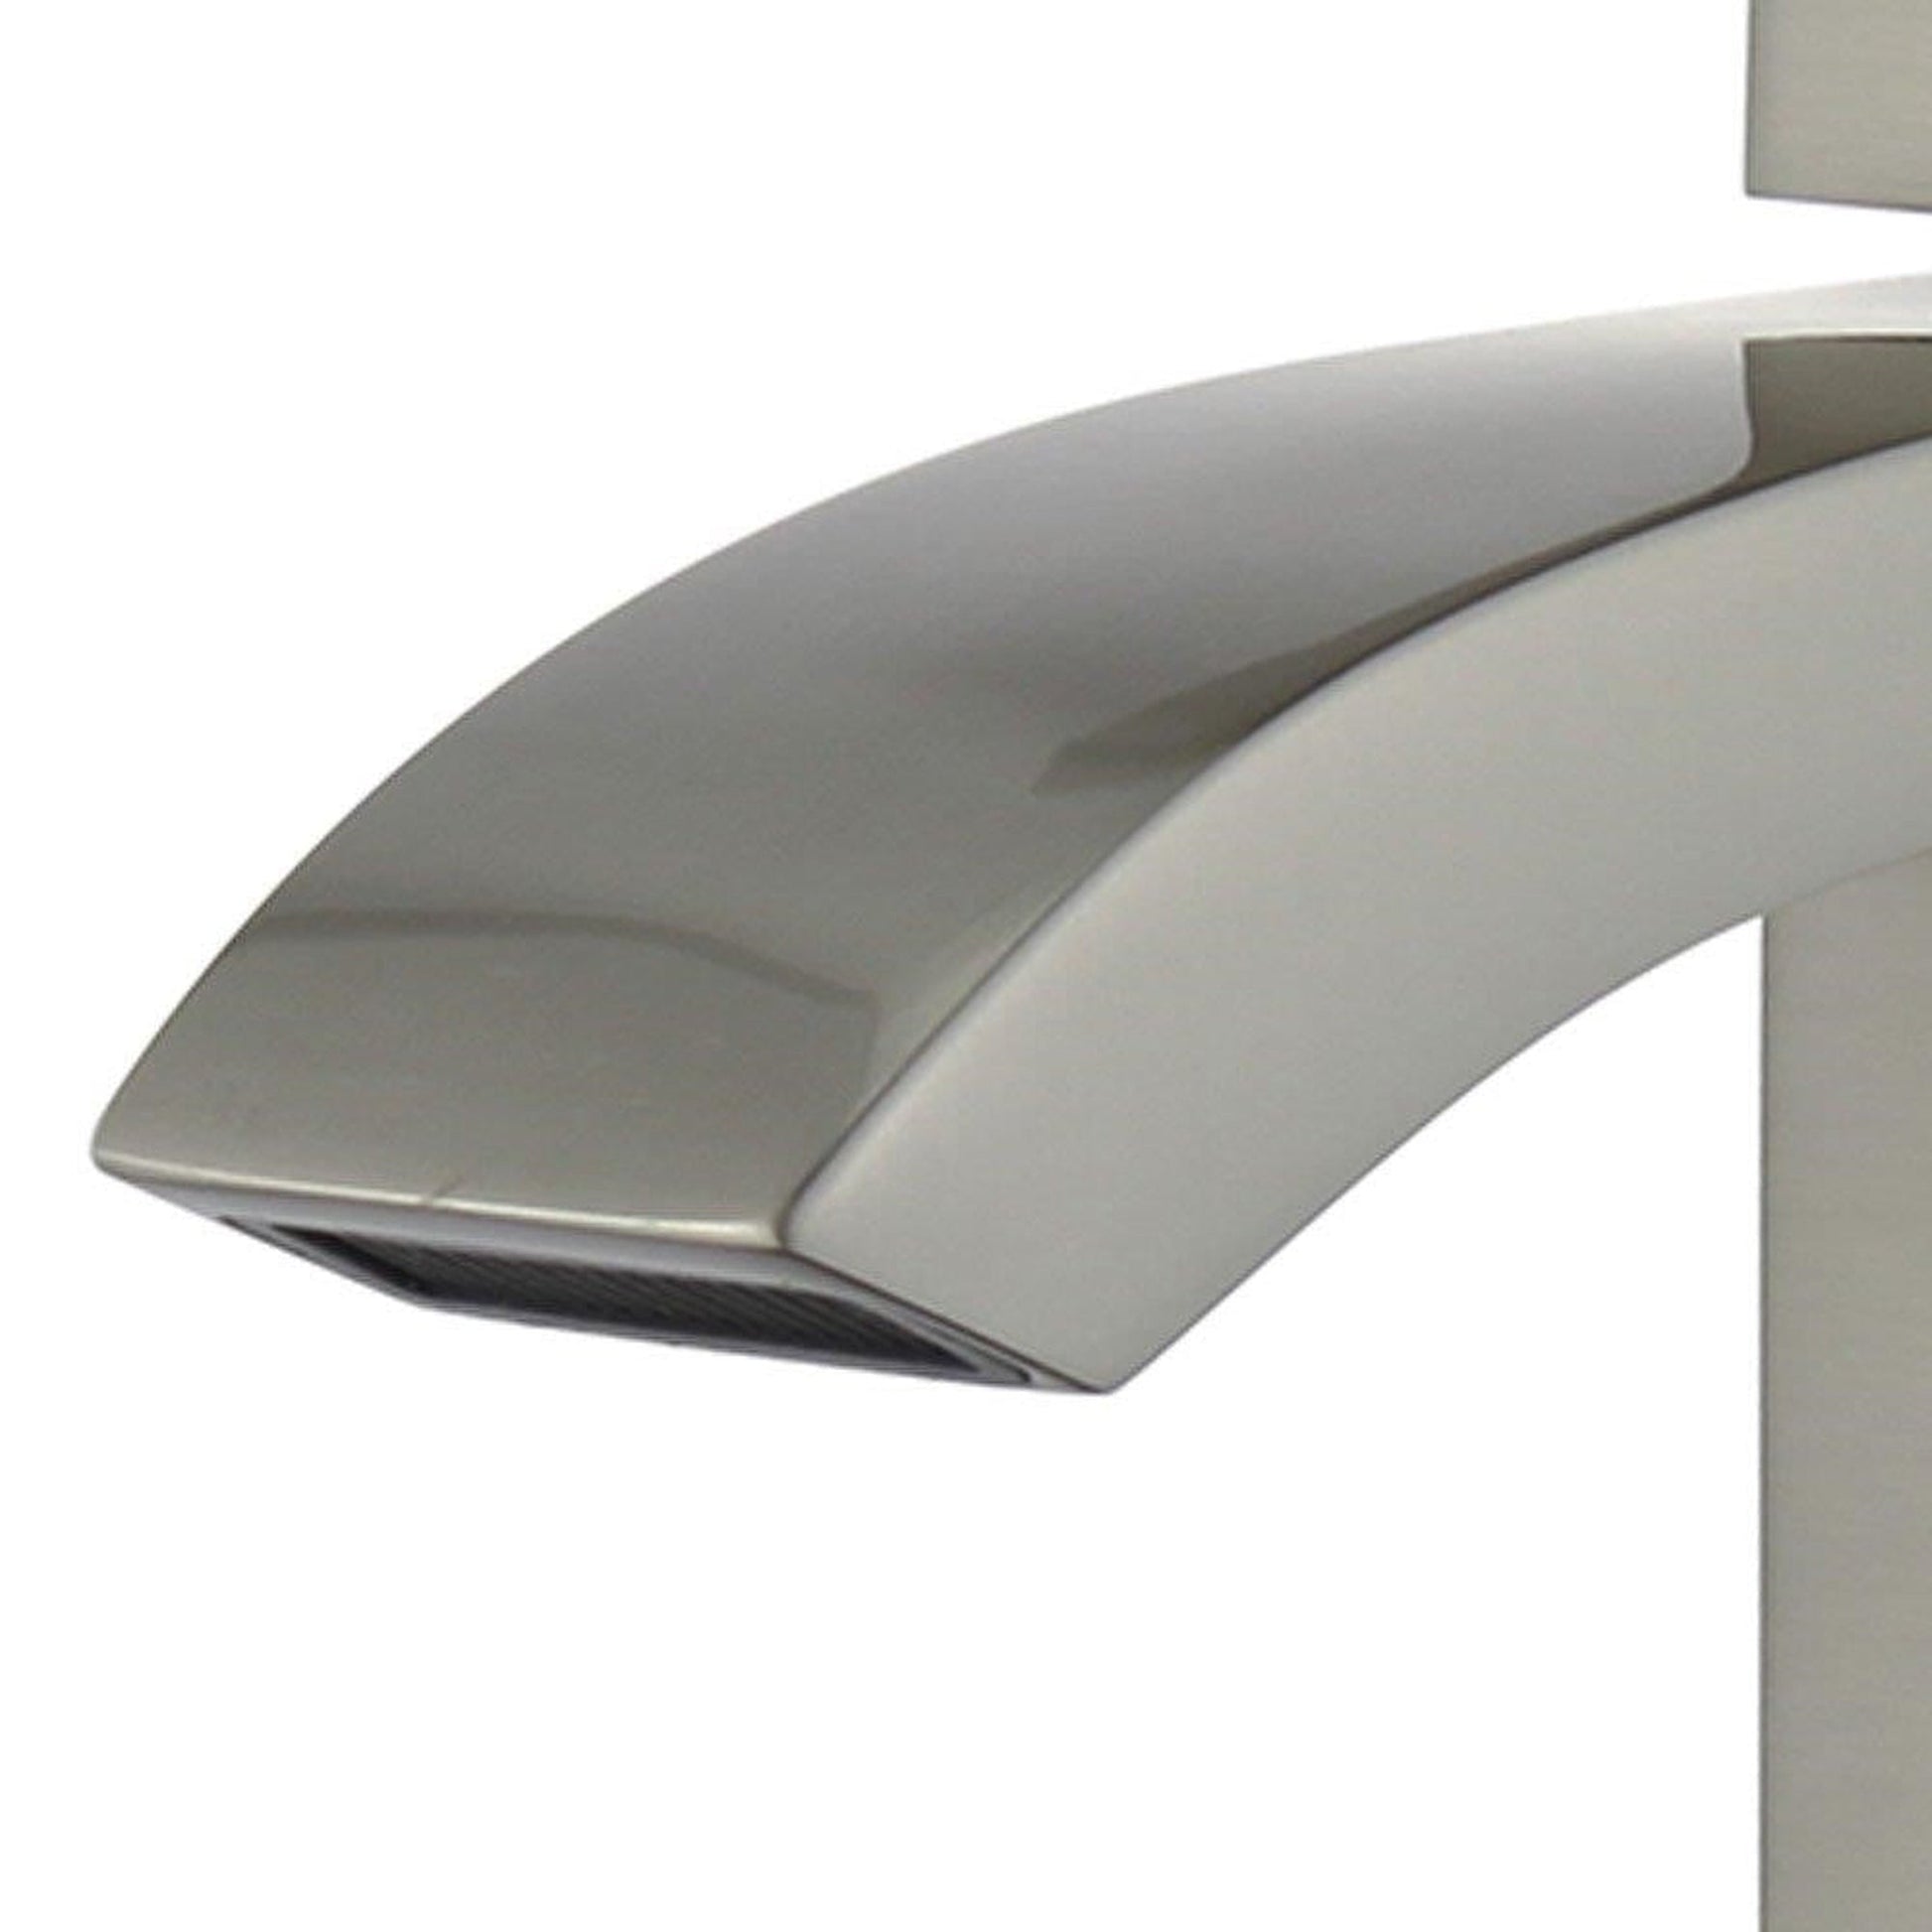 Bellaterra Home Cordoba 7" Single-Hole and Single Handle Brushed Nickel Bathroom Faucet